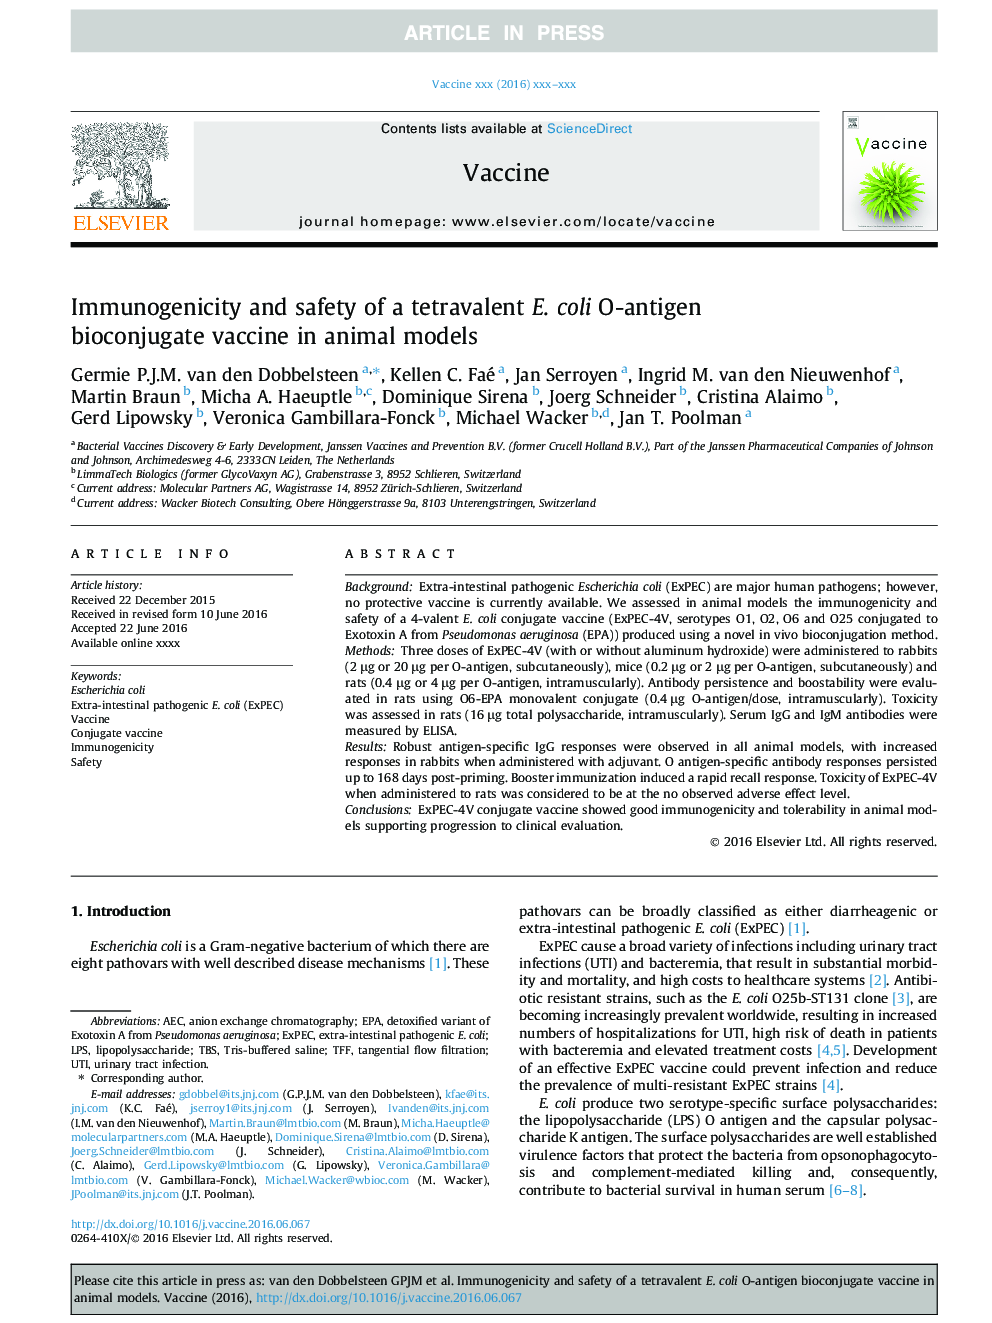 Immunogenicity and safety of a tetravalent E. coli O-antigen bioconjugate vaccine in animal models